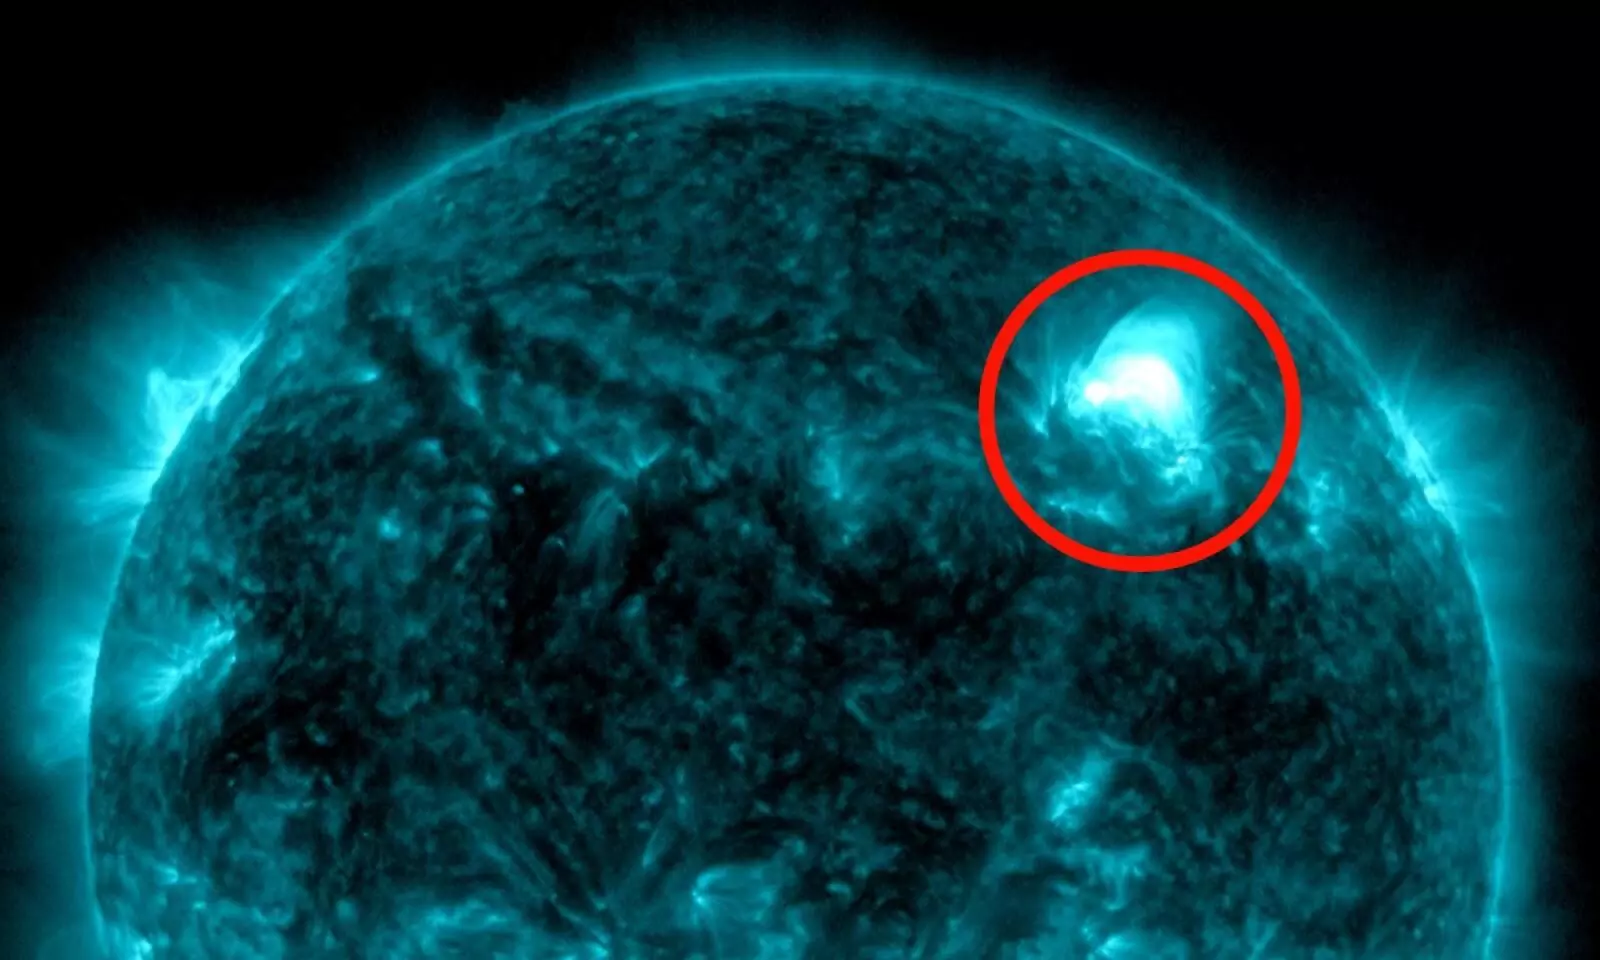 NASA captures X8-class flare hits earth, disrupting radio communications